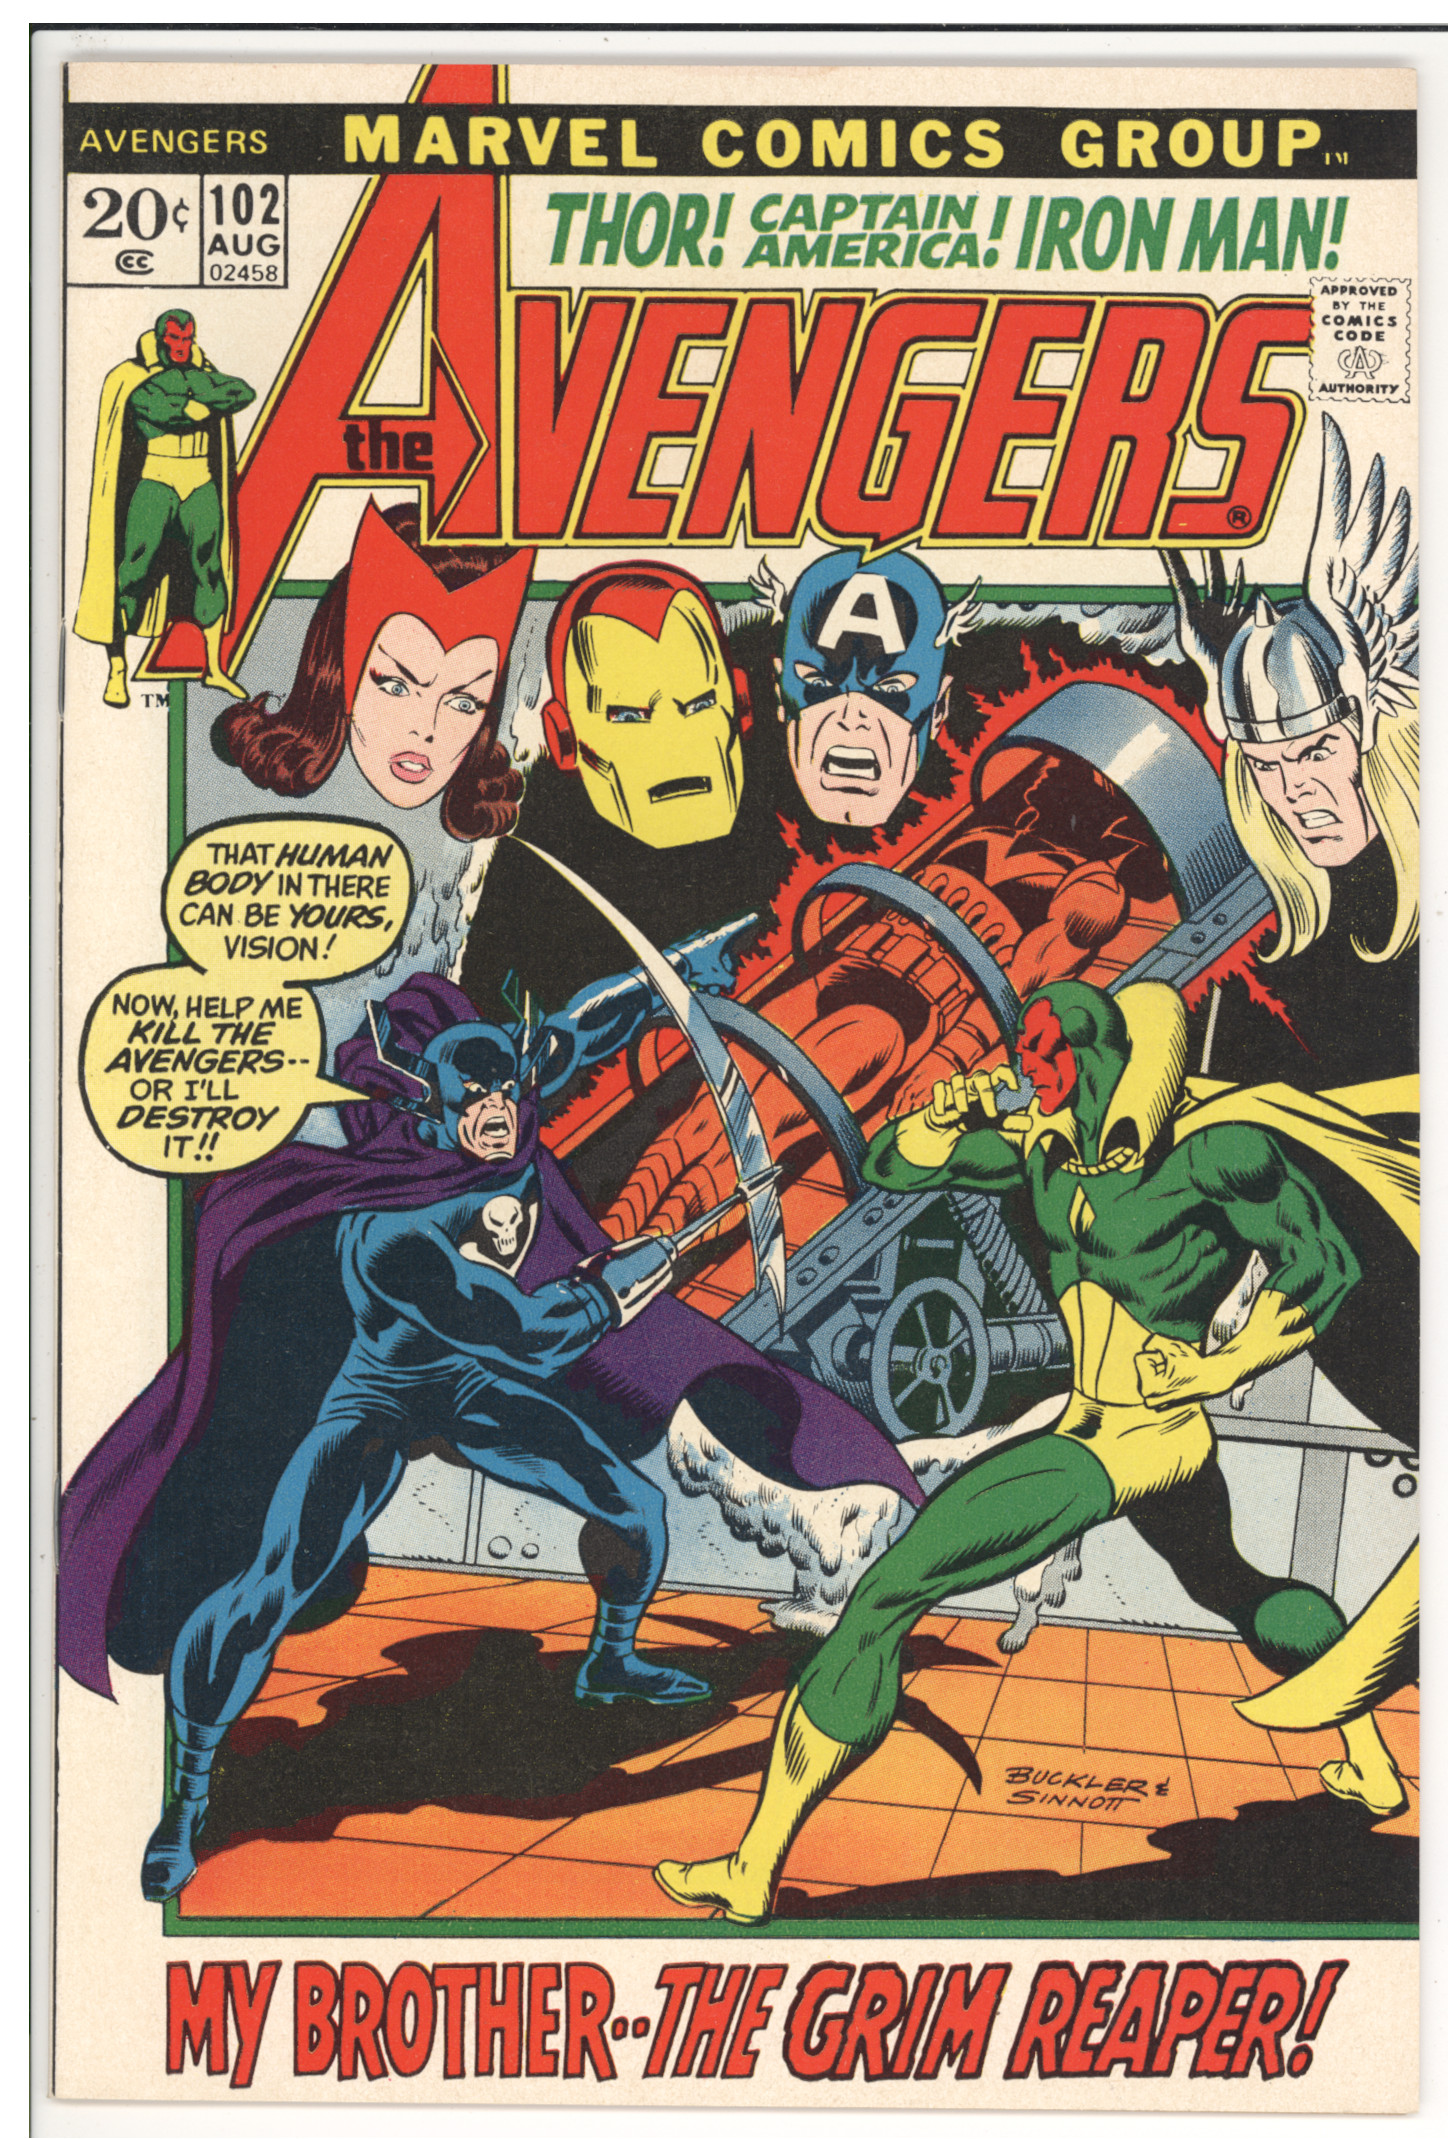 Avengers #102 front